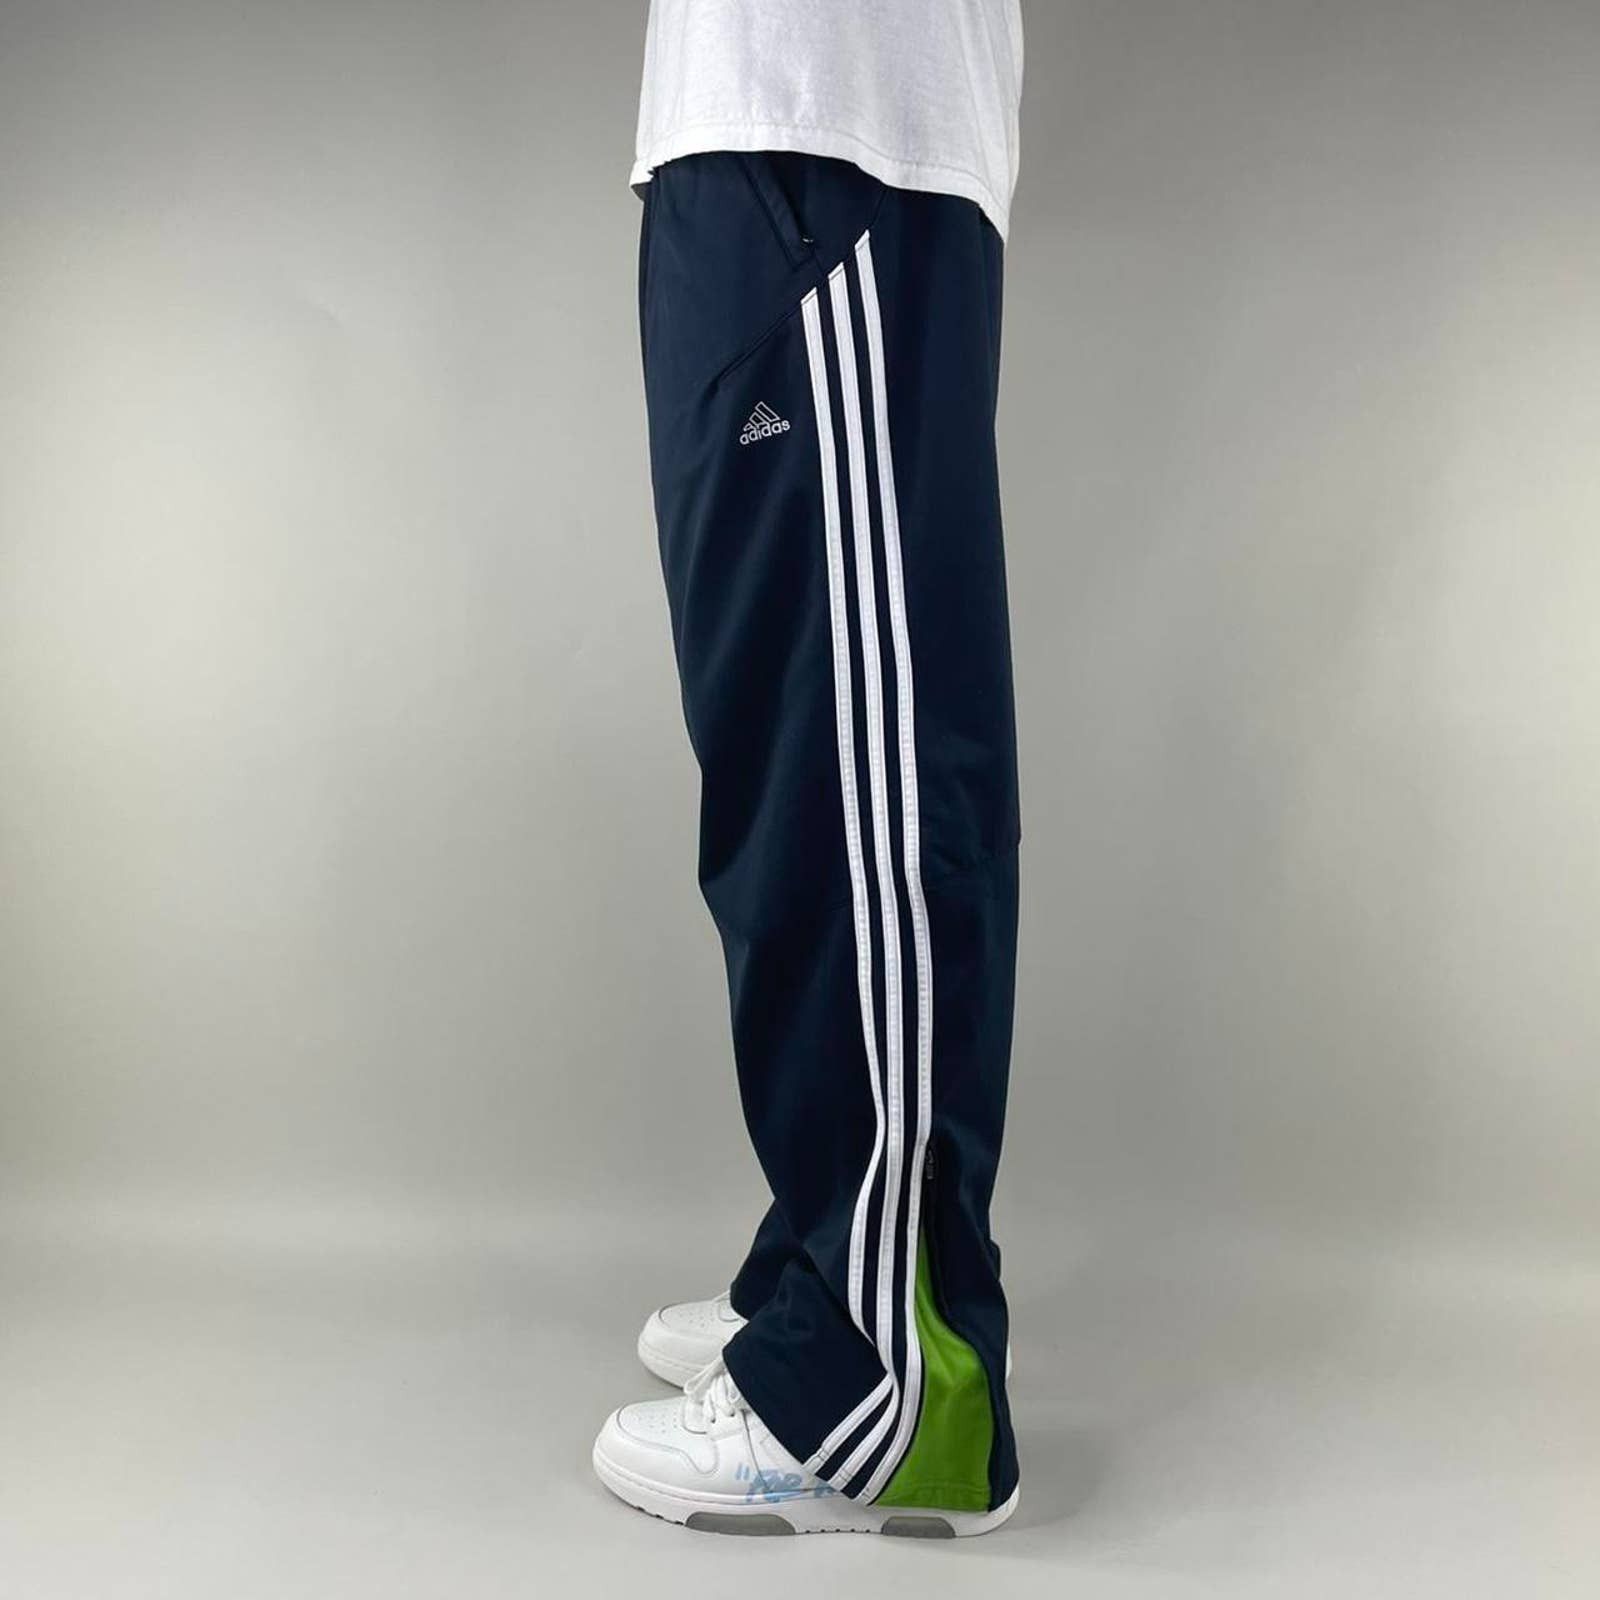 Adidas Super Sick Navy Blue Adidas Trackpants Size US 34 / EU 50 - 2 Preview